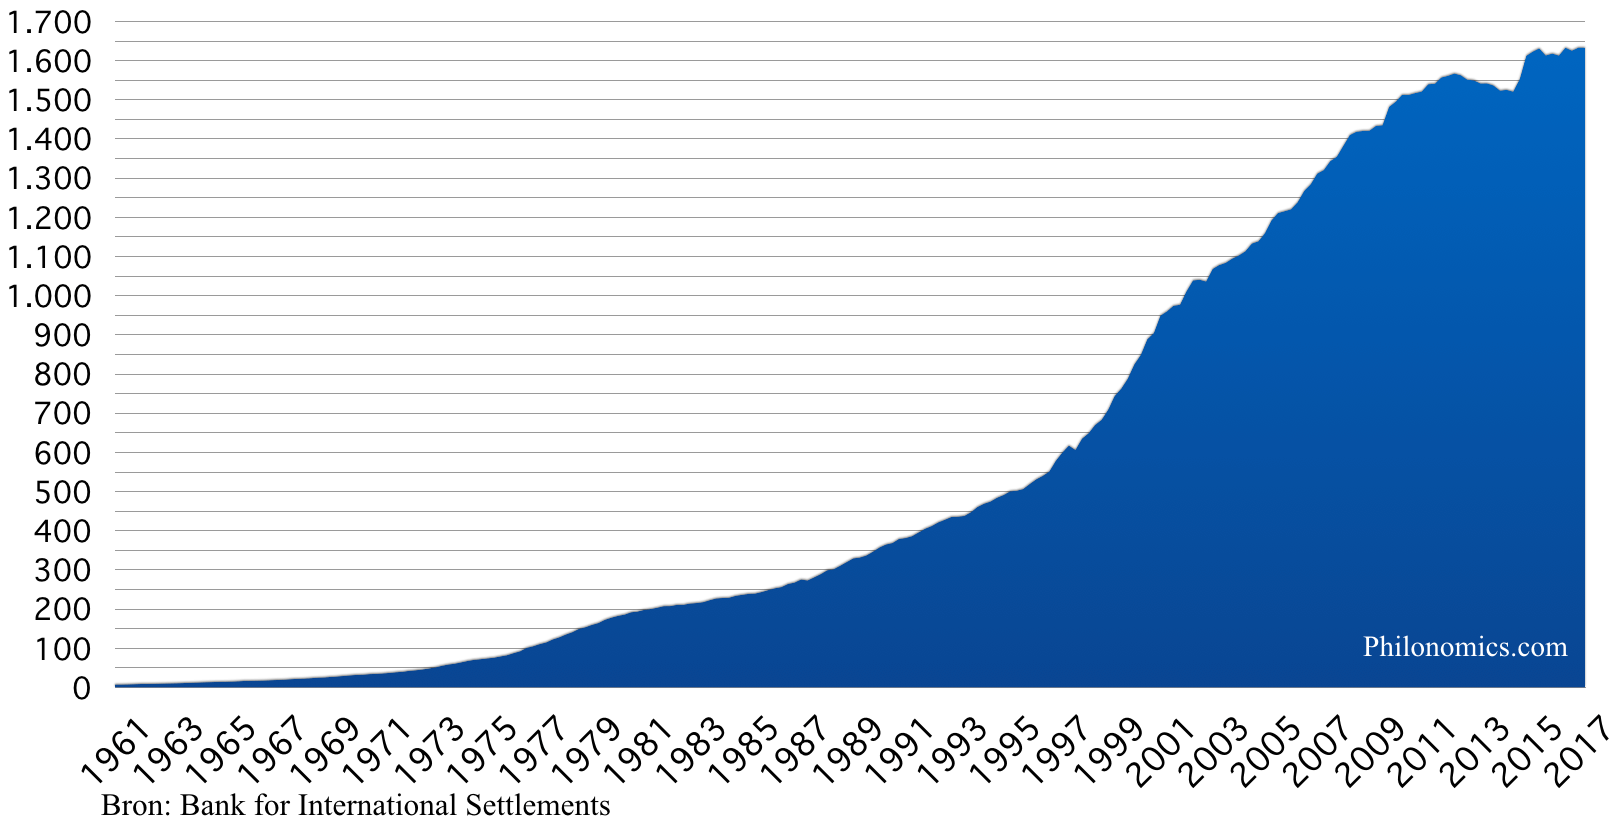 Private schuld Nederland (in miljarden €) 1960